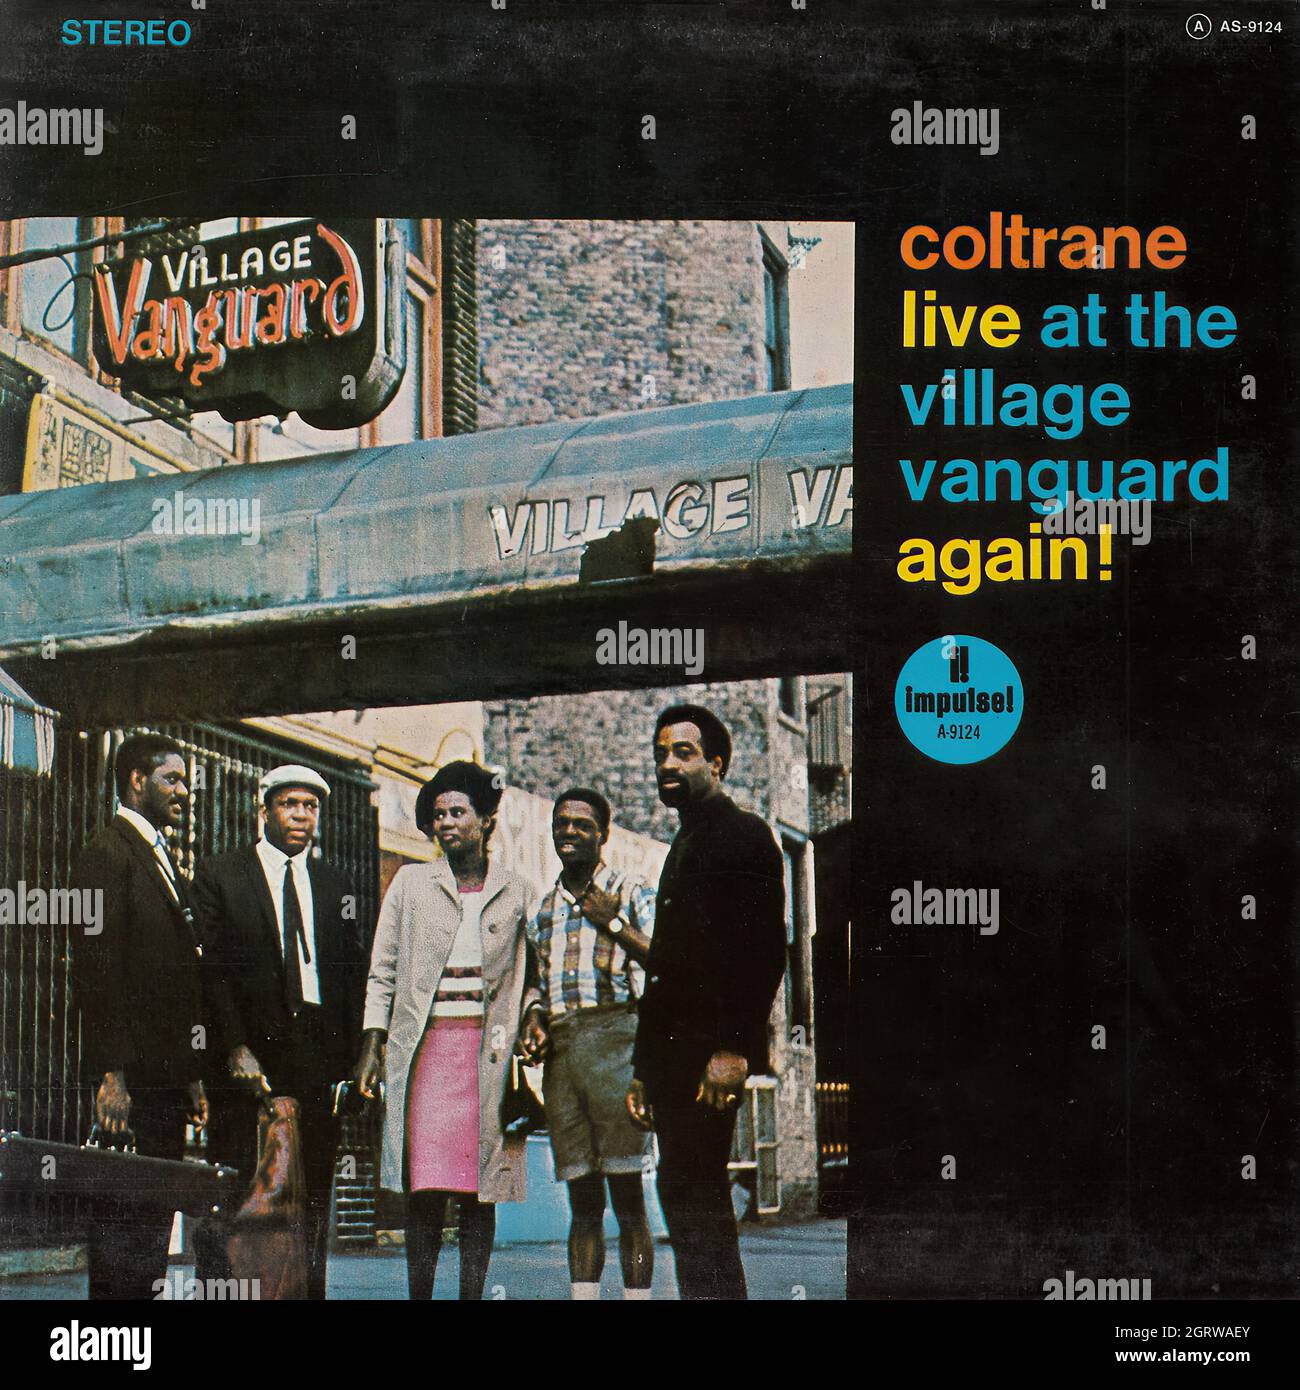 John Coltrane - Live at the Village Vanguard again! - Vintage Vinyl Record  Cover Stock Photo - Alamy